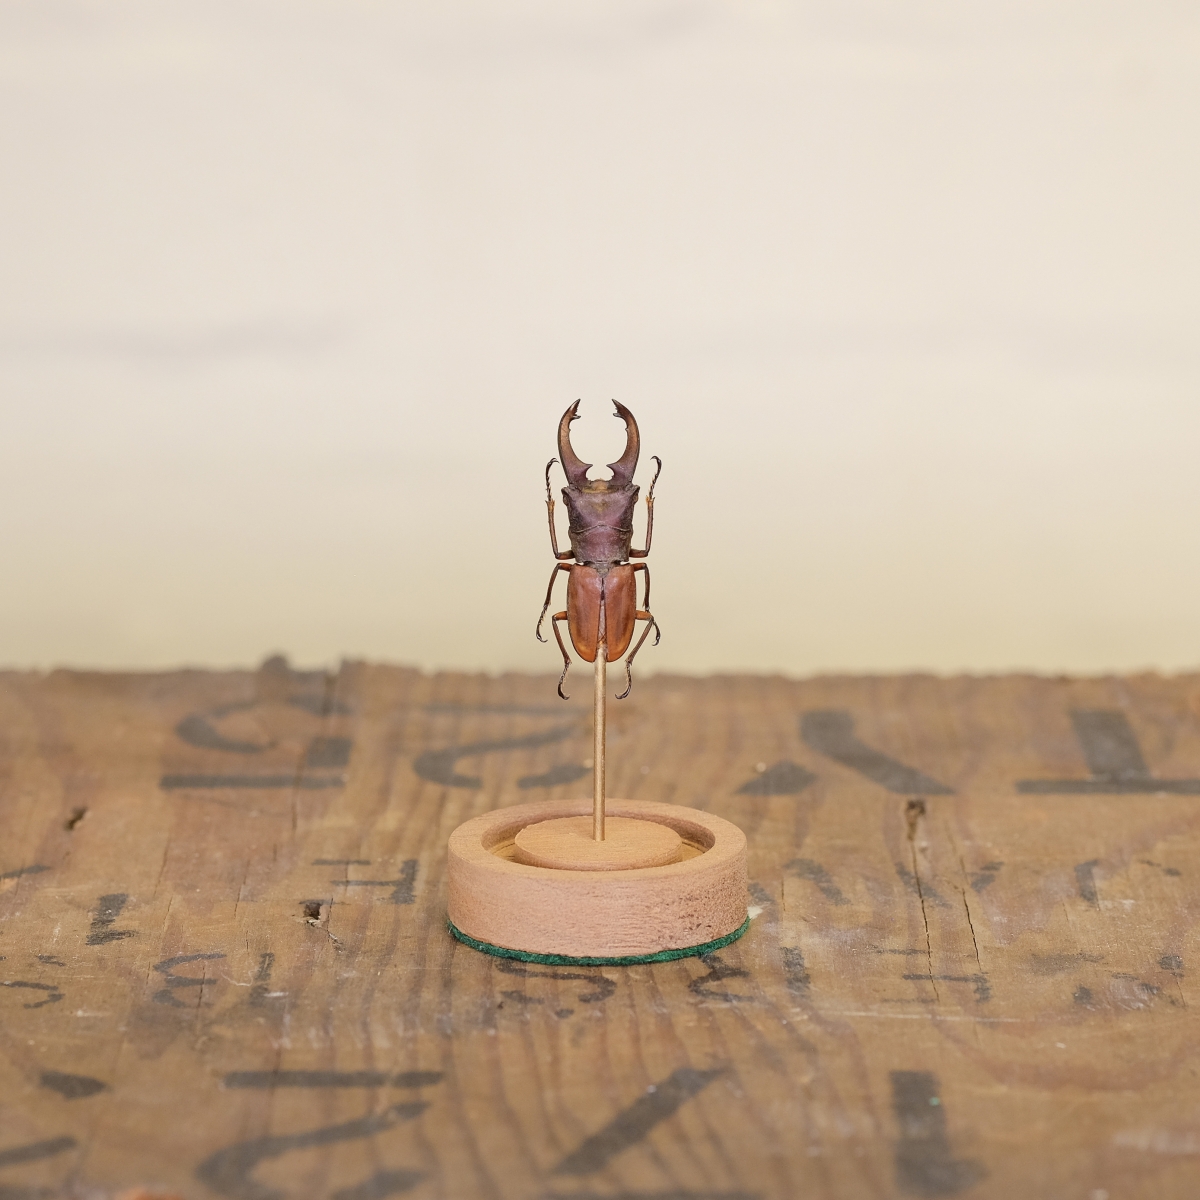 Stag Beetle in Mini Dome (Cyclommatus dehaani)